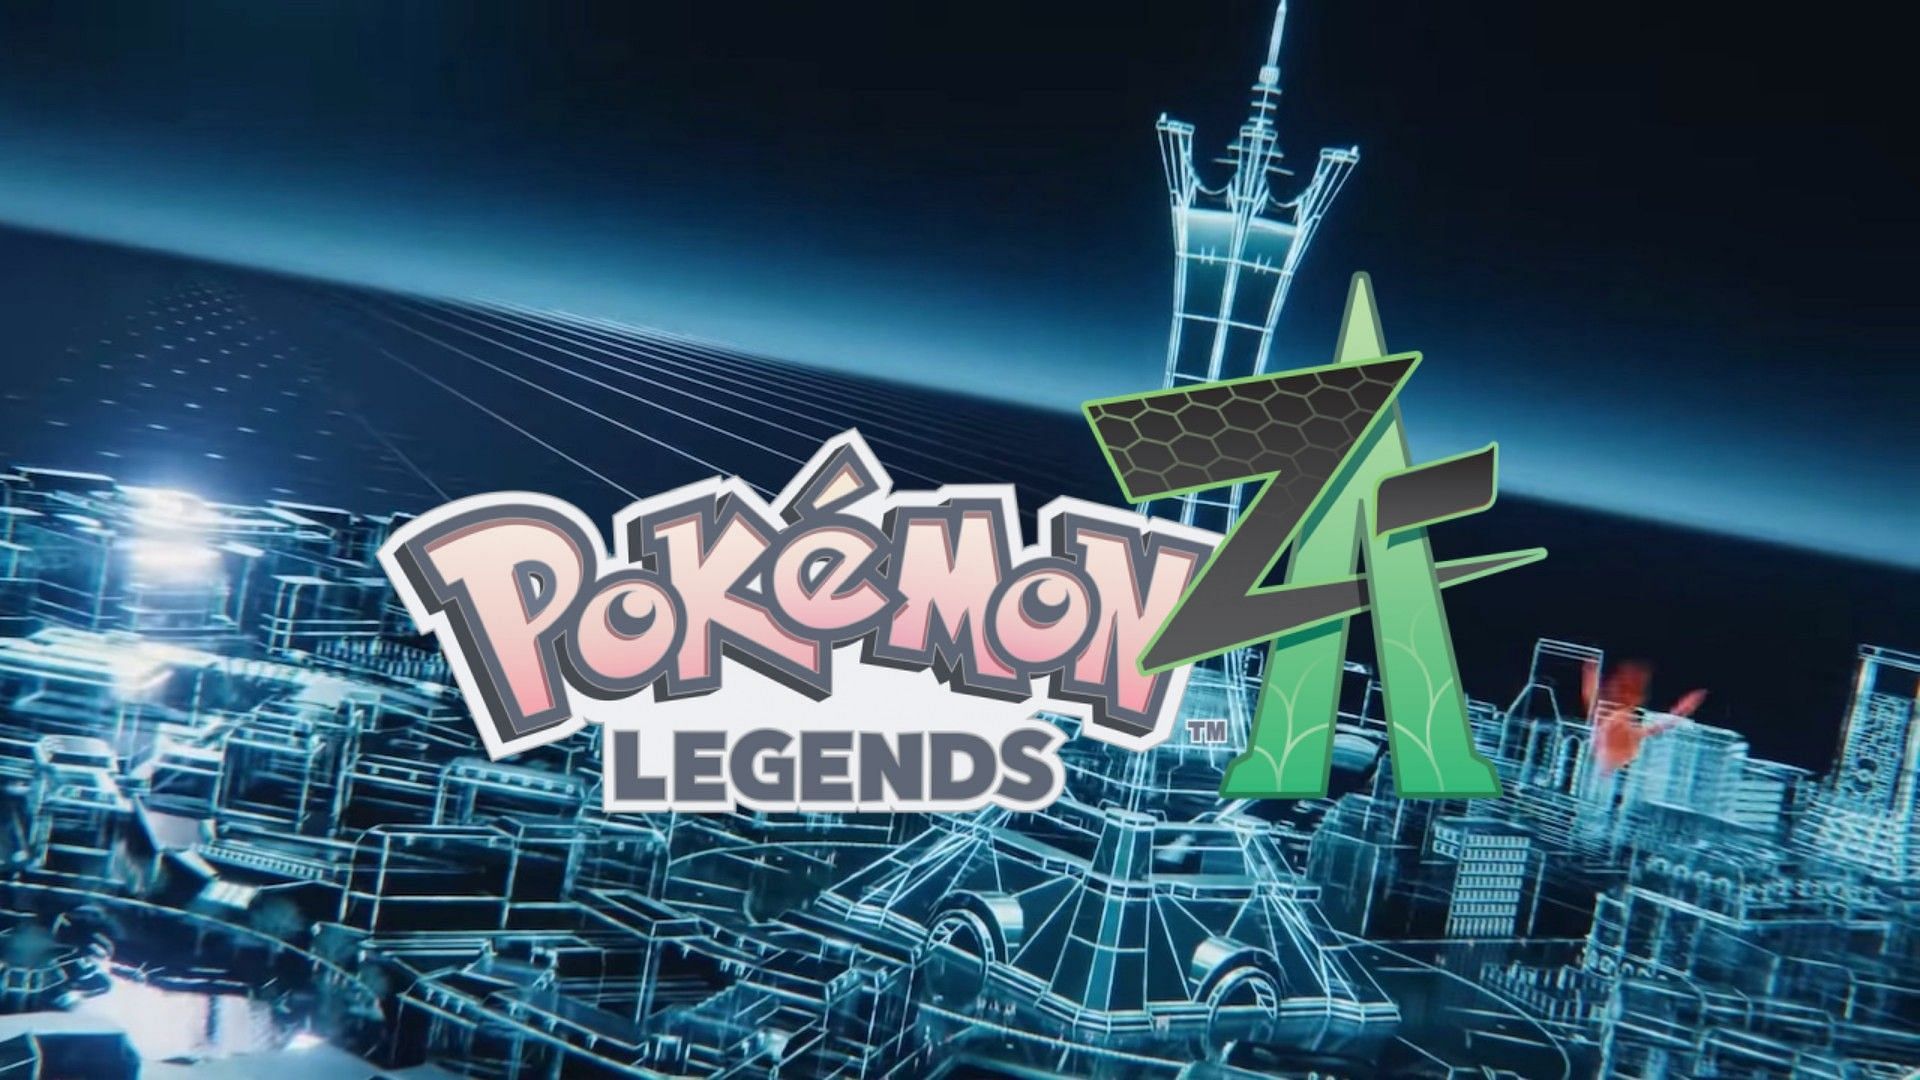 Official artwork for Pokemon Legends Z-A